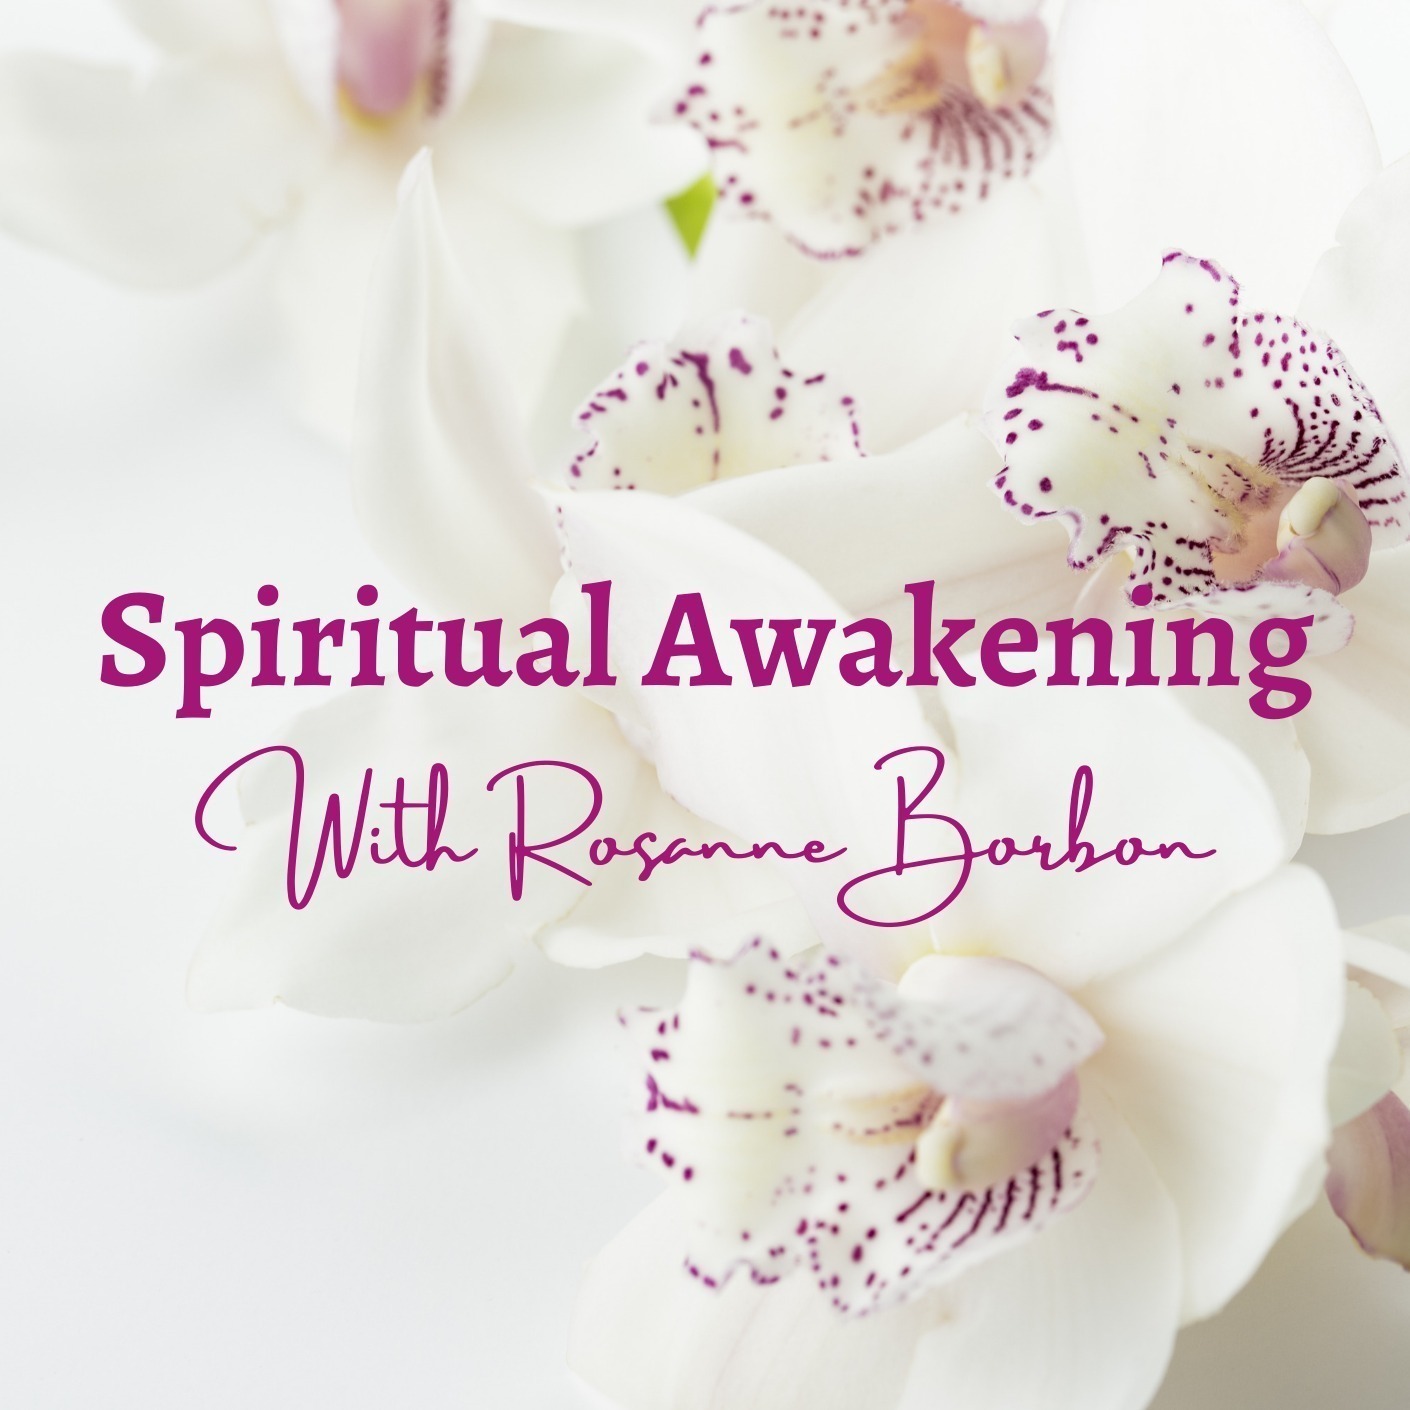 Spiritual Awakening with Rosanne Borbon